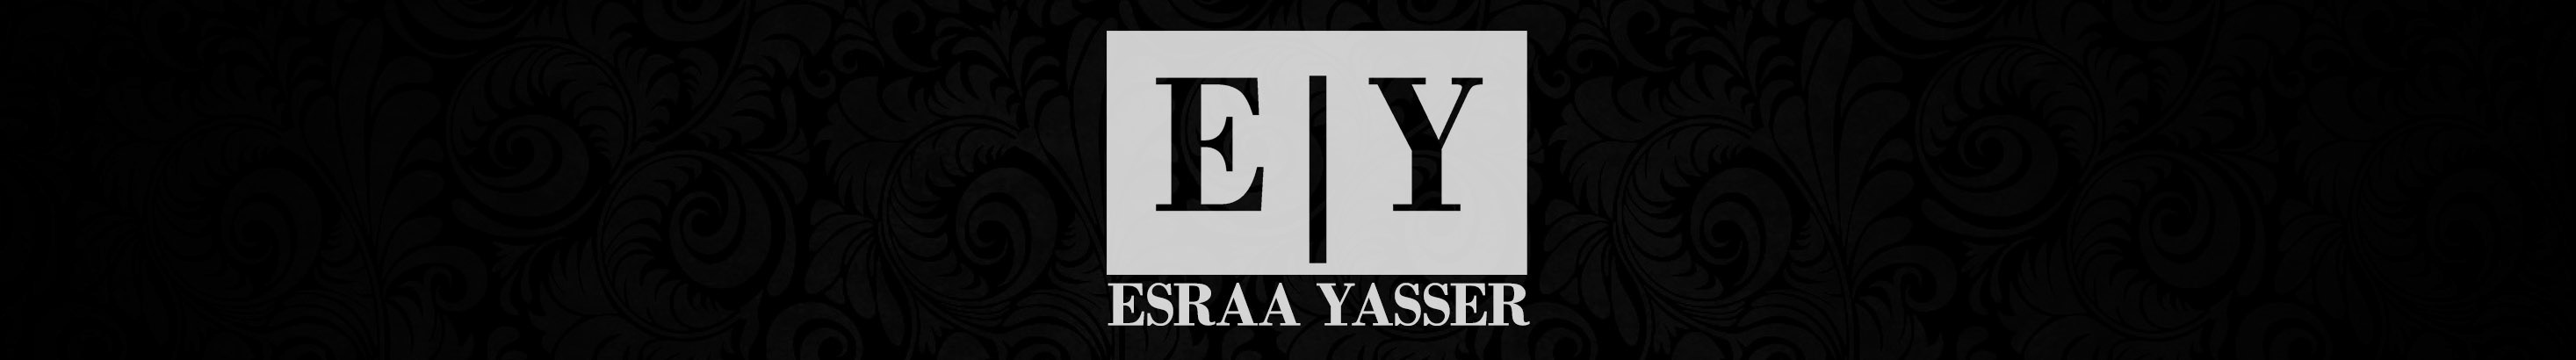 Esraa Yasser's profile banner